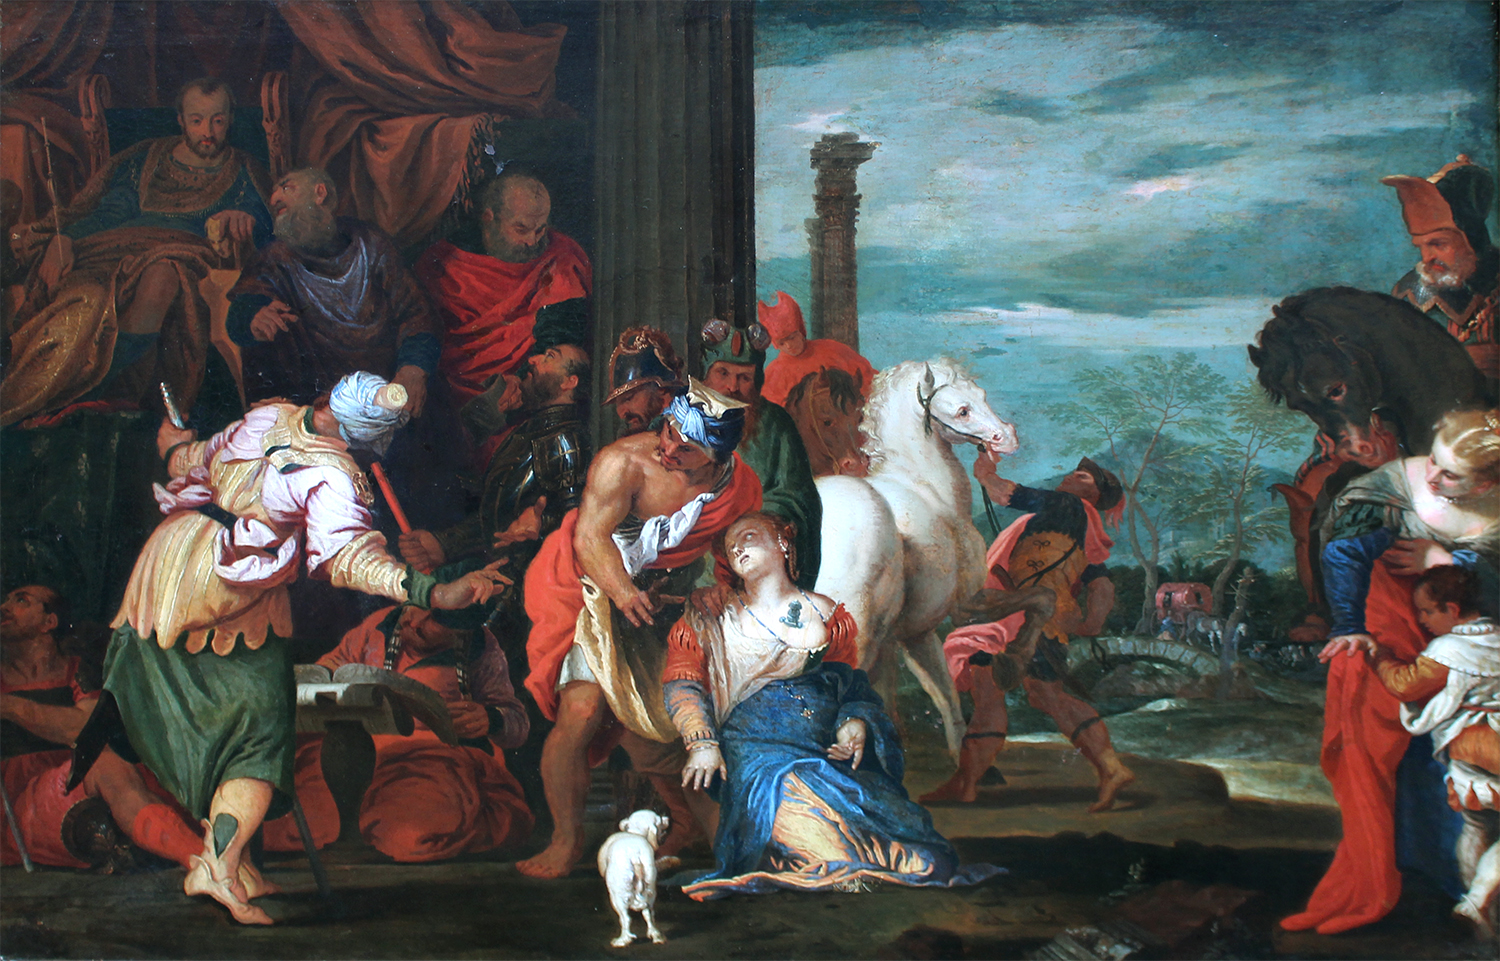 The Martyrdom of Saint Justine